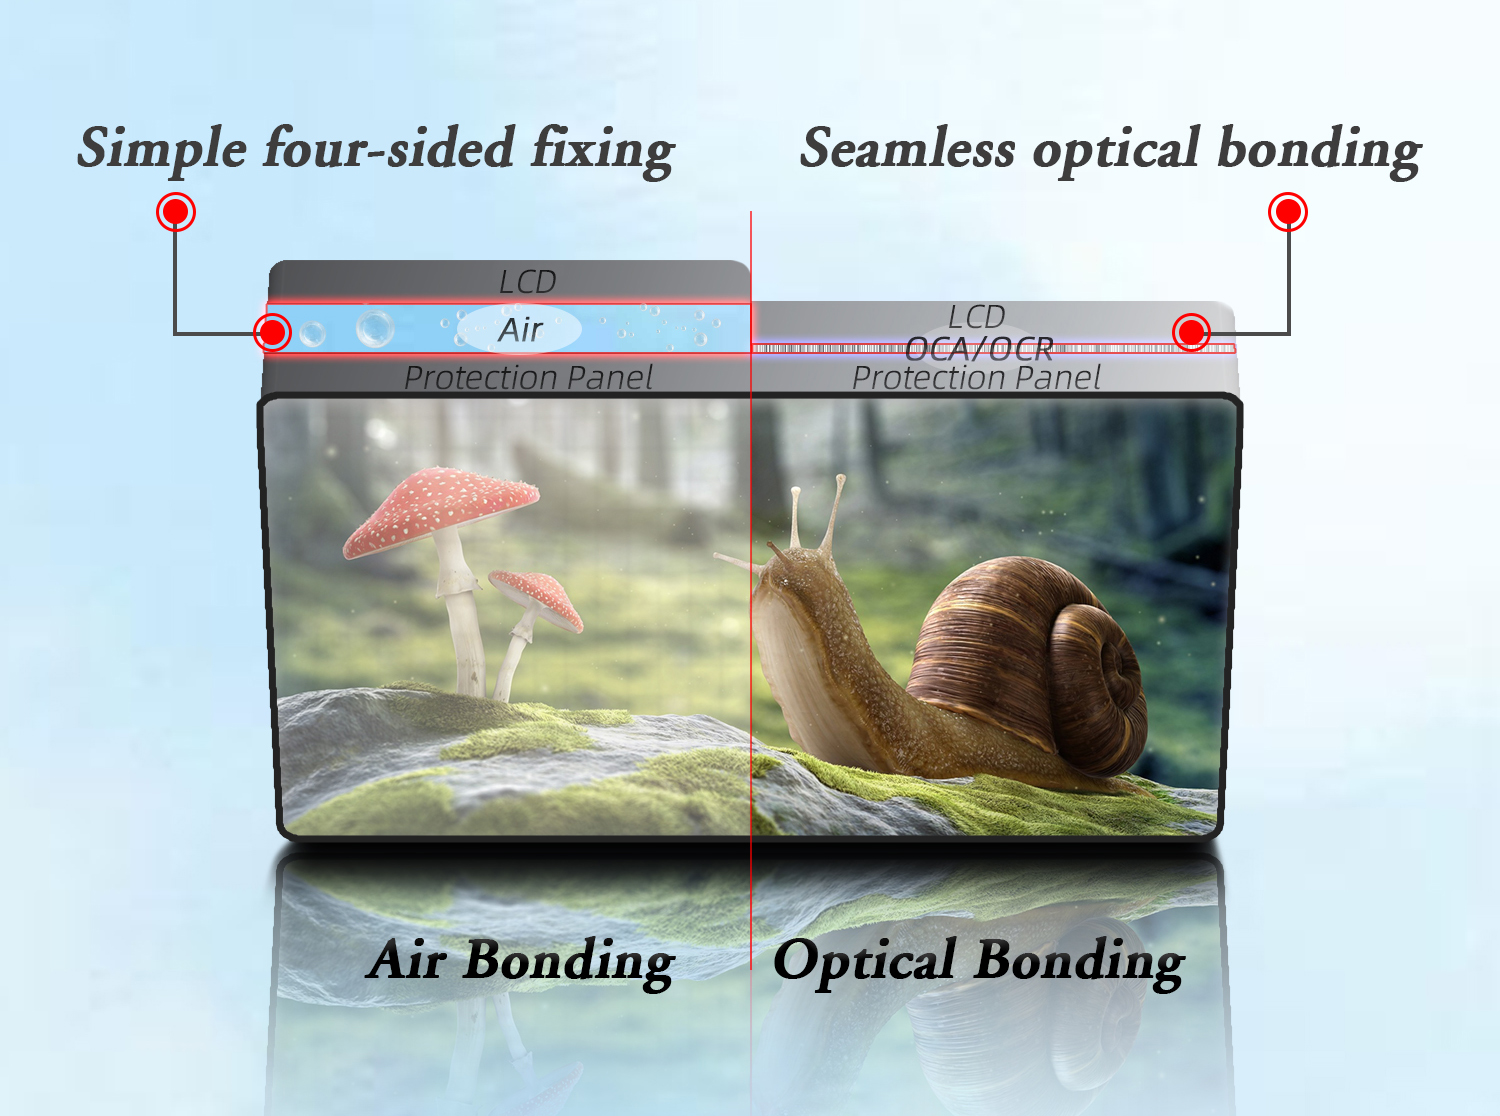 Benefits of Optical Bonding